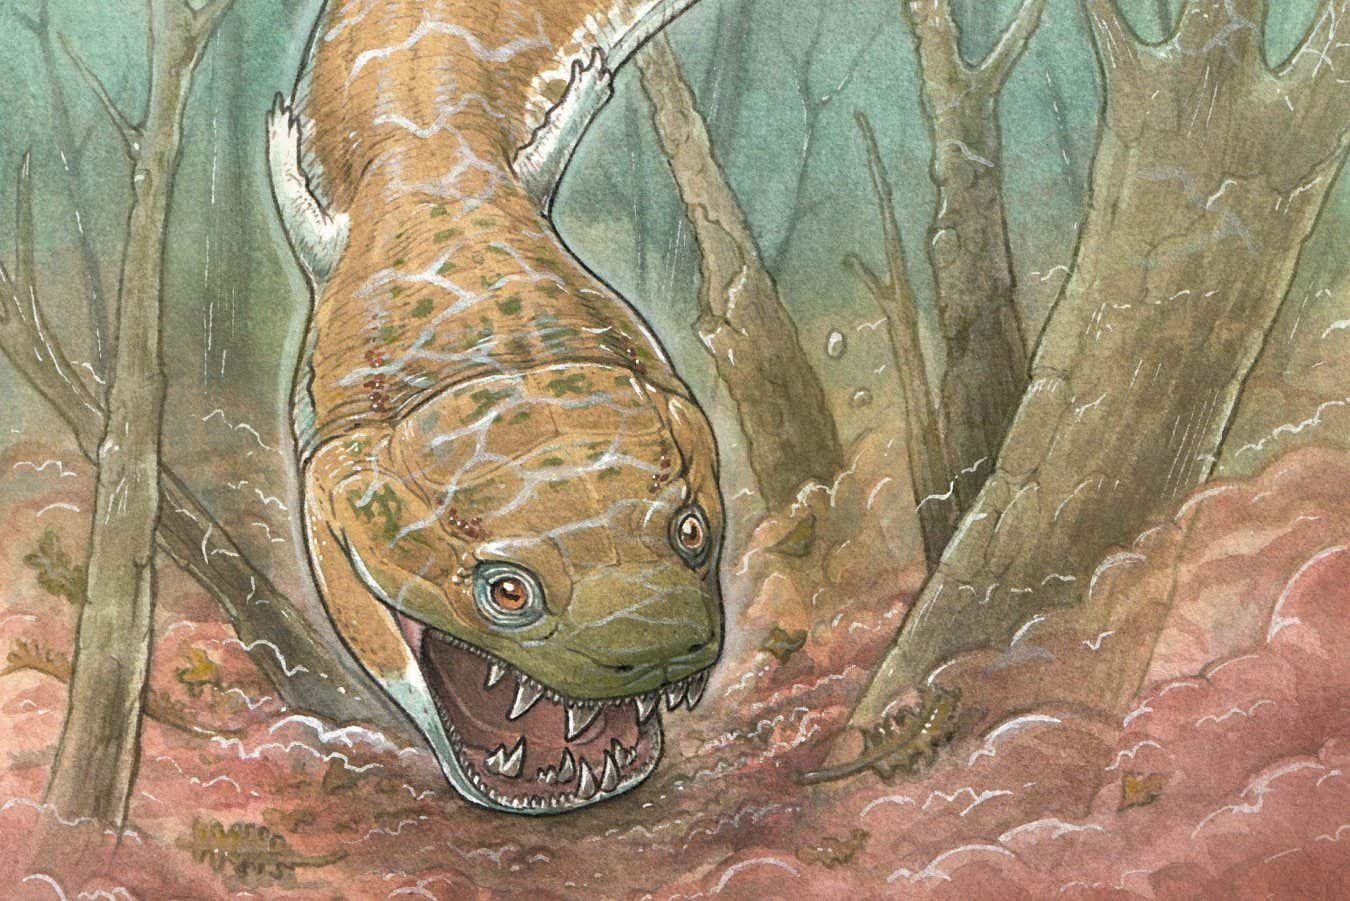 Gaiasia jennyae: Giant salamander-like predator roamed Namibia 280 million years ago